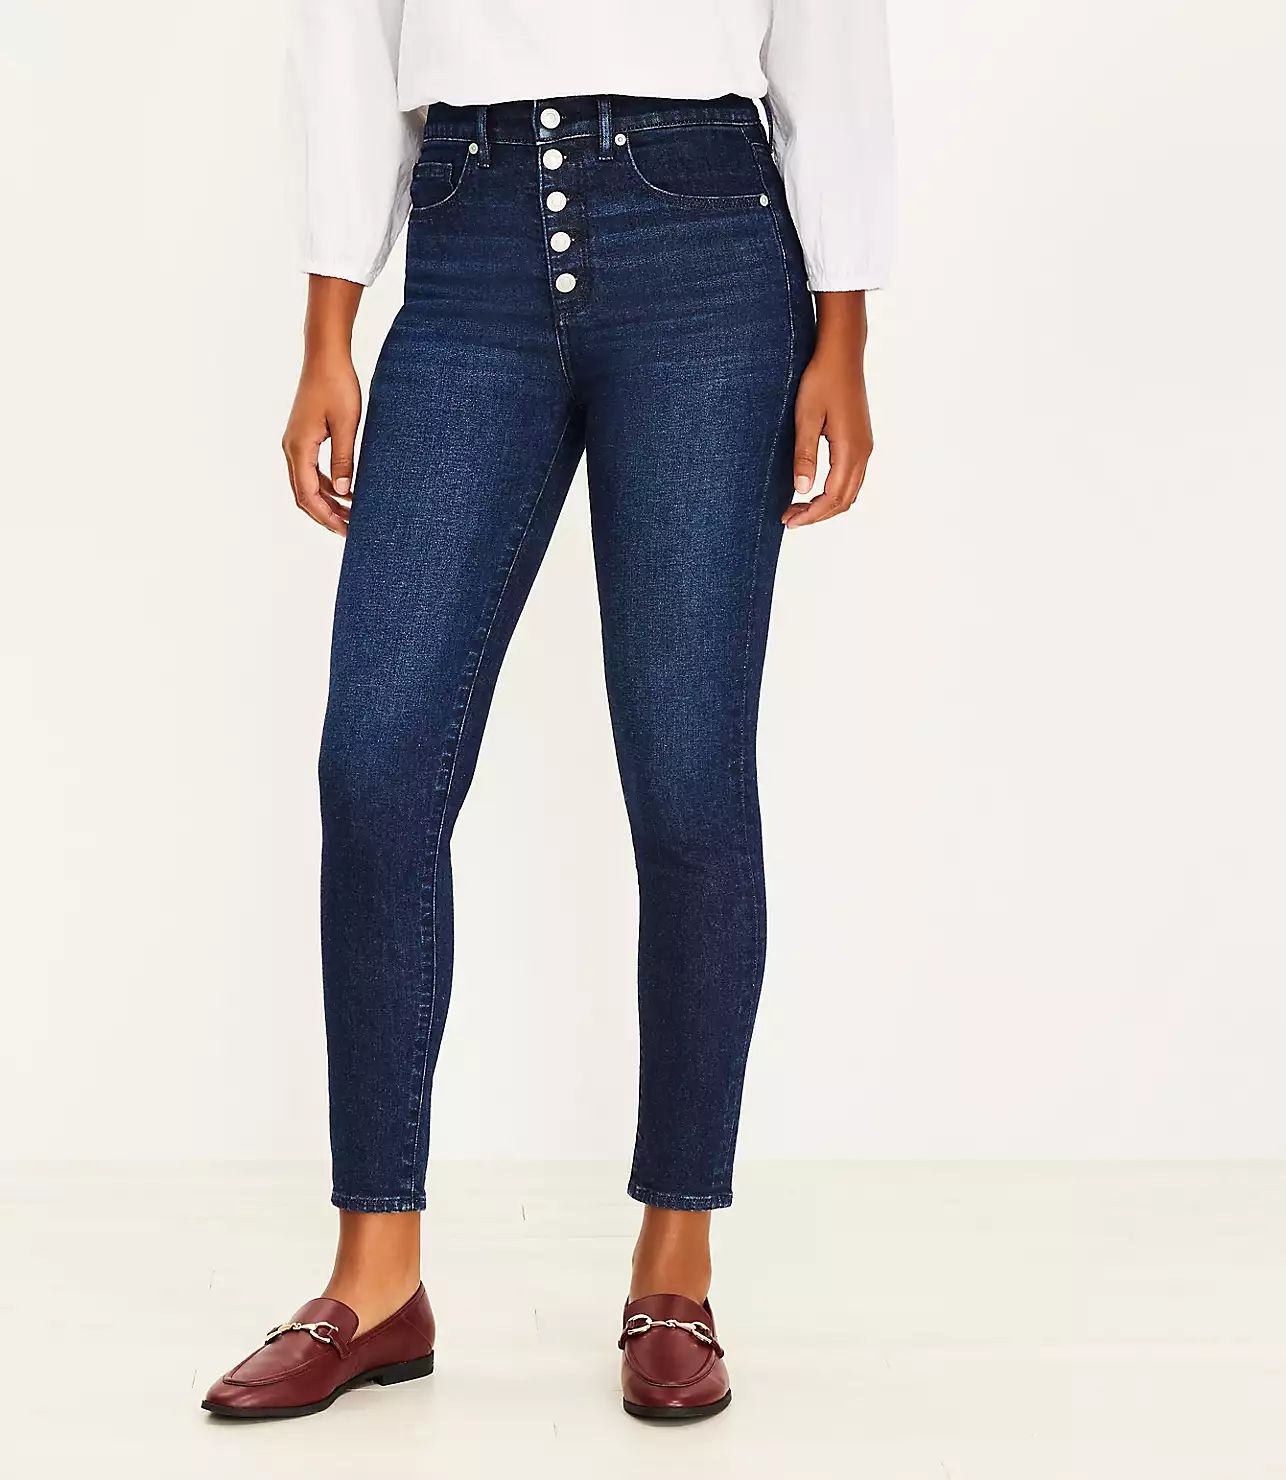 Petite Button Front High Rise Skinny Jeans in Dark Indigo Wash | LOFT